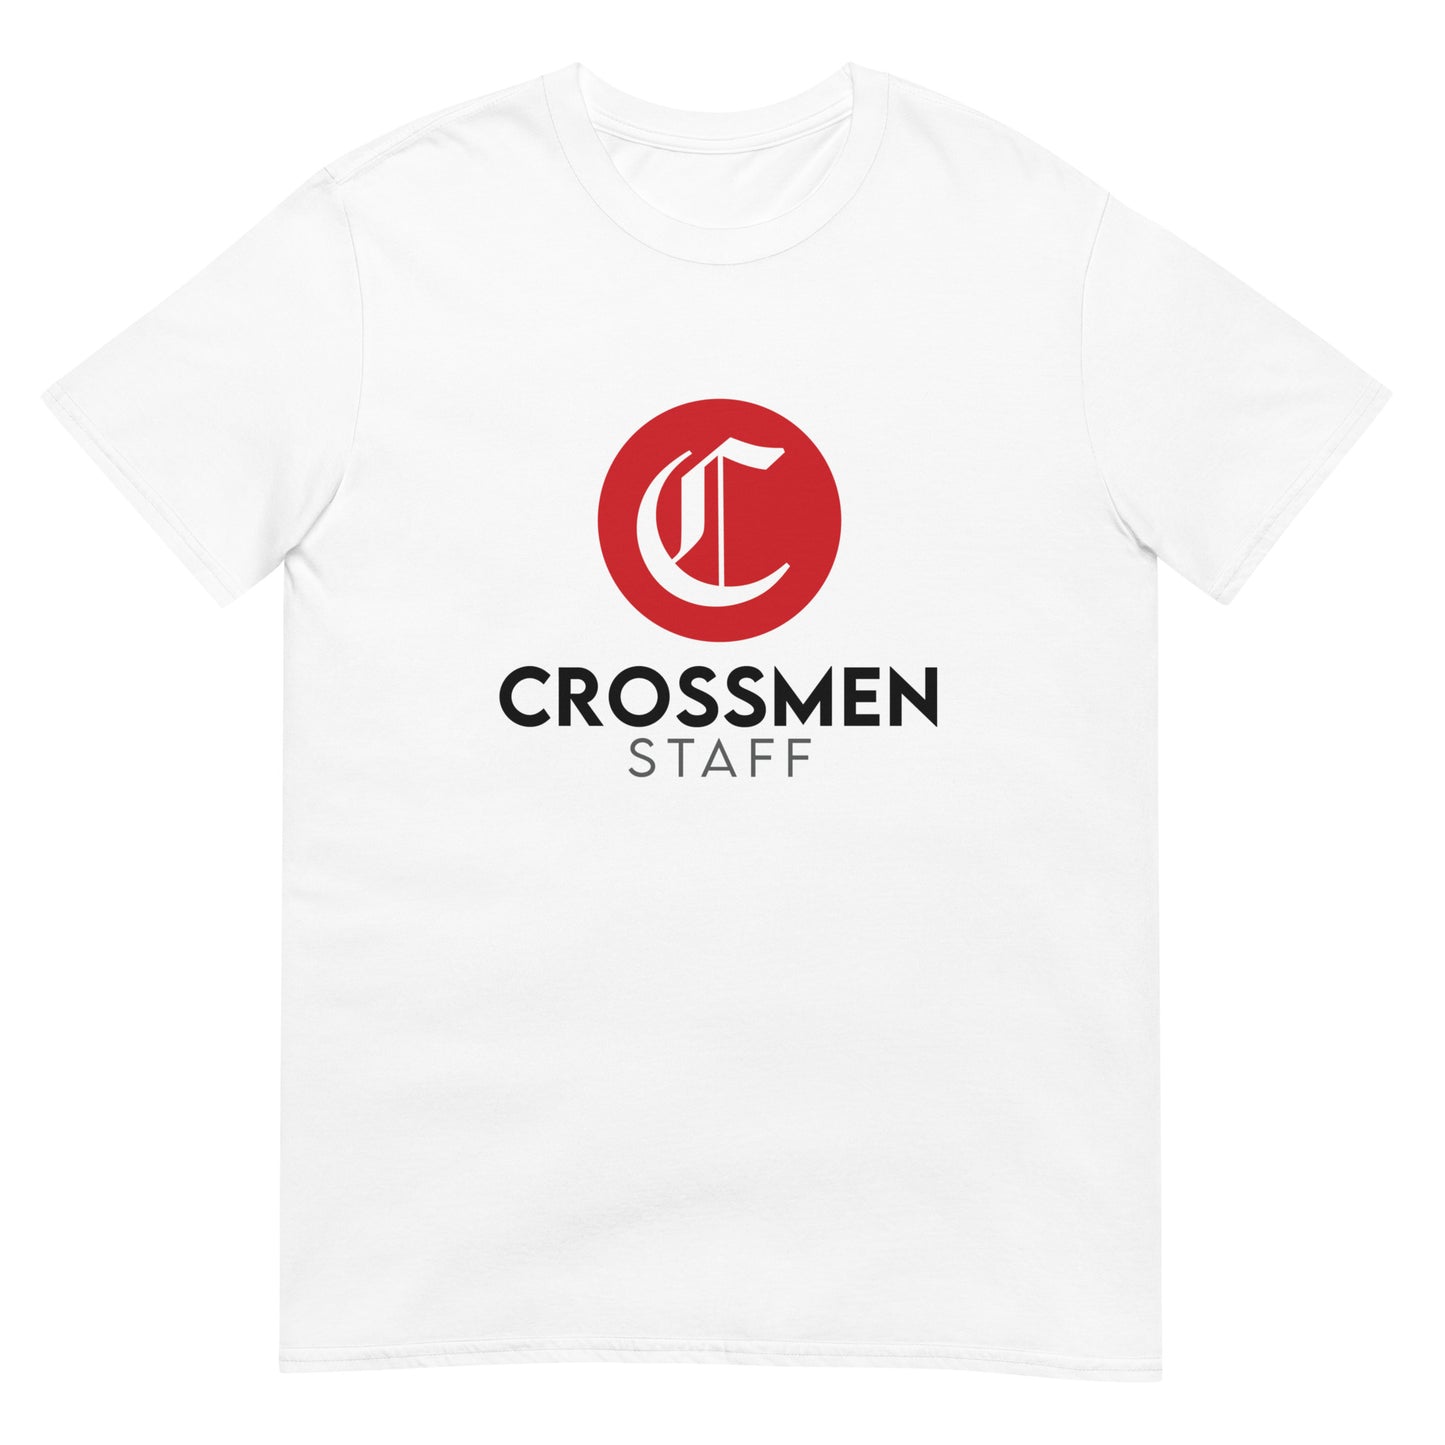 Crossmen staff unisex shirt